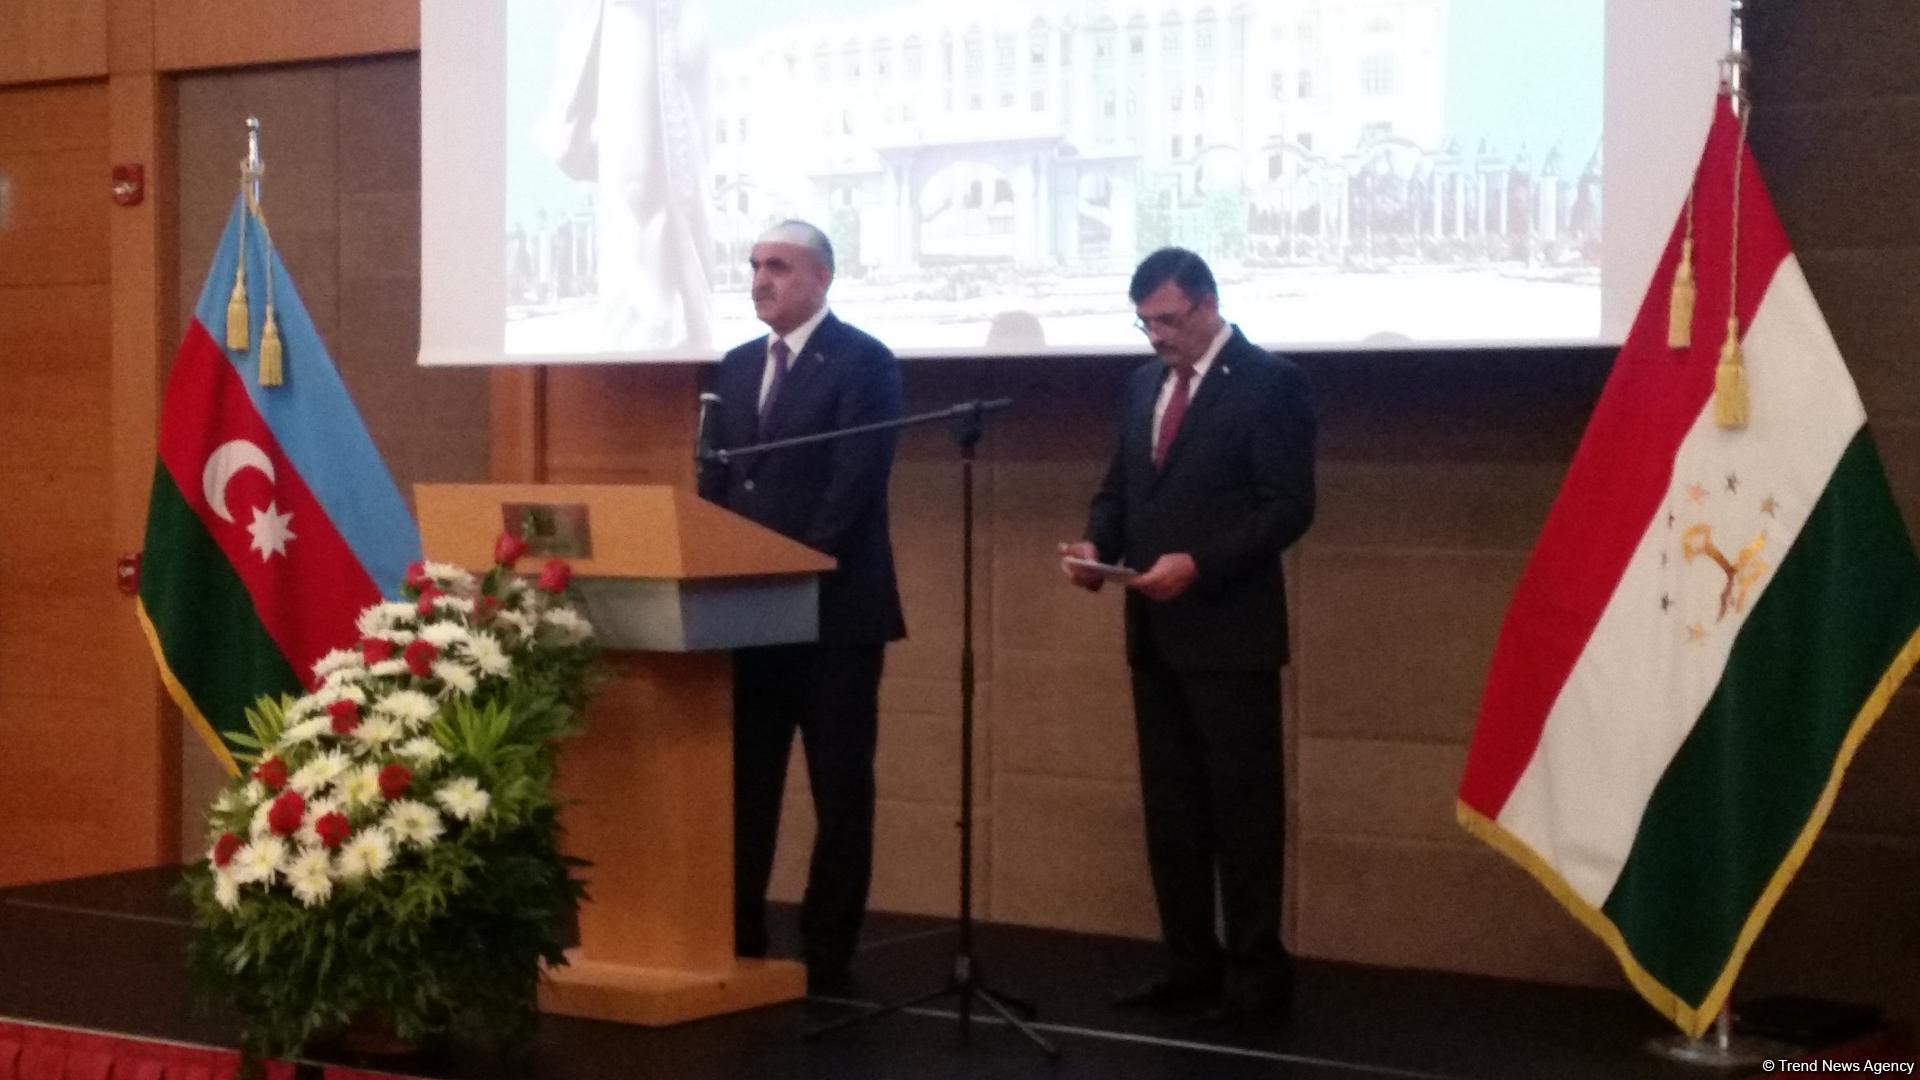 В Баку отметили день независимости Таджикистана (ФОТО)